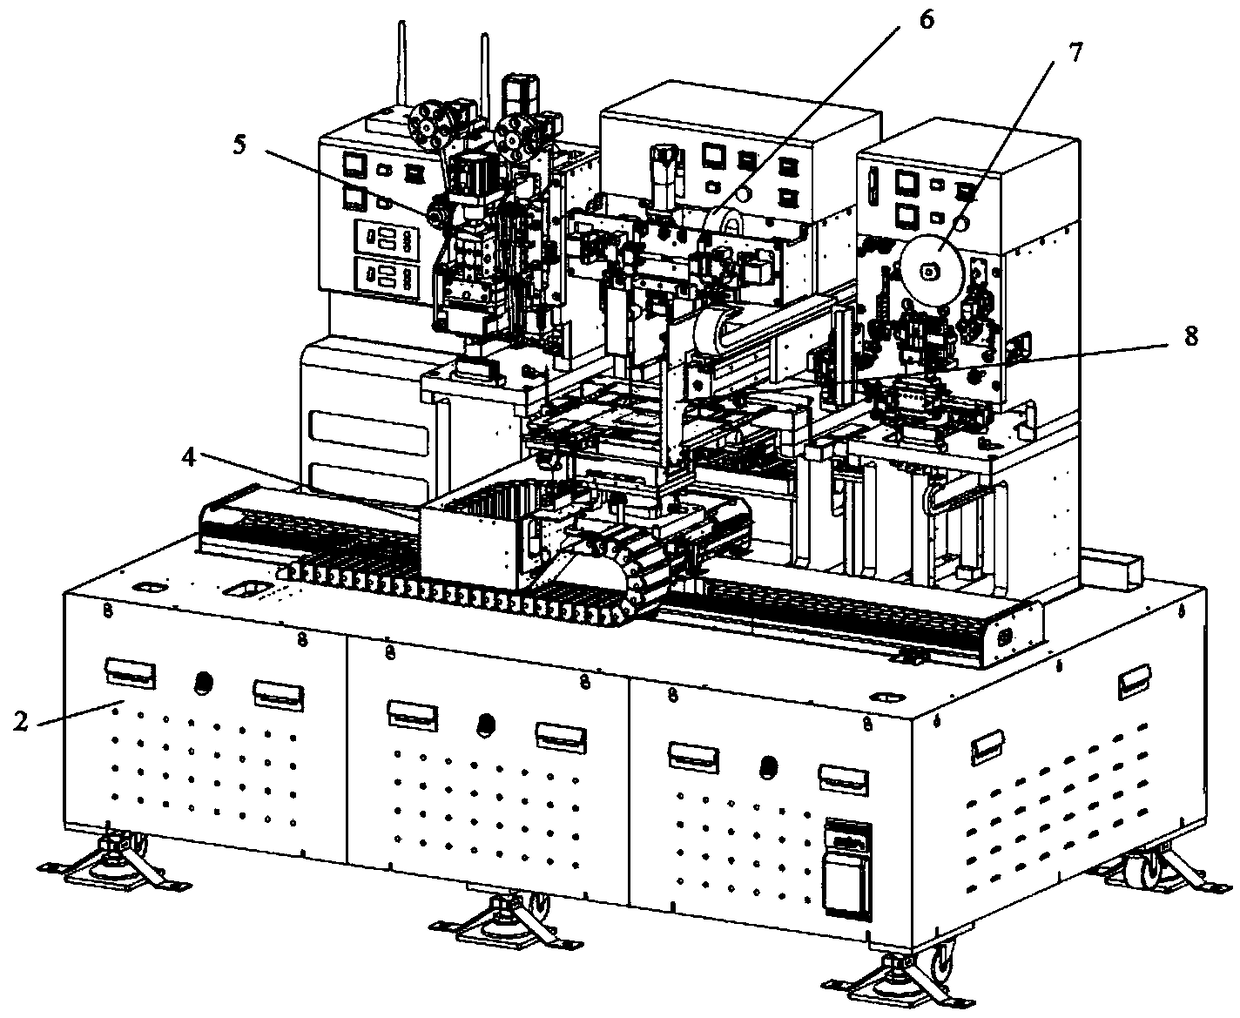 High-precision automatic FPC (Flexible Printed Circuit) binding equipment